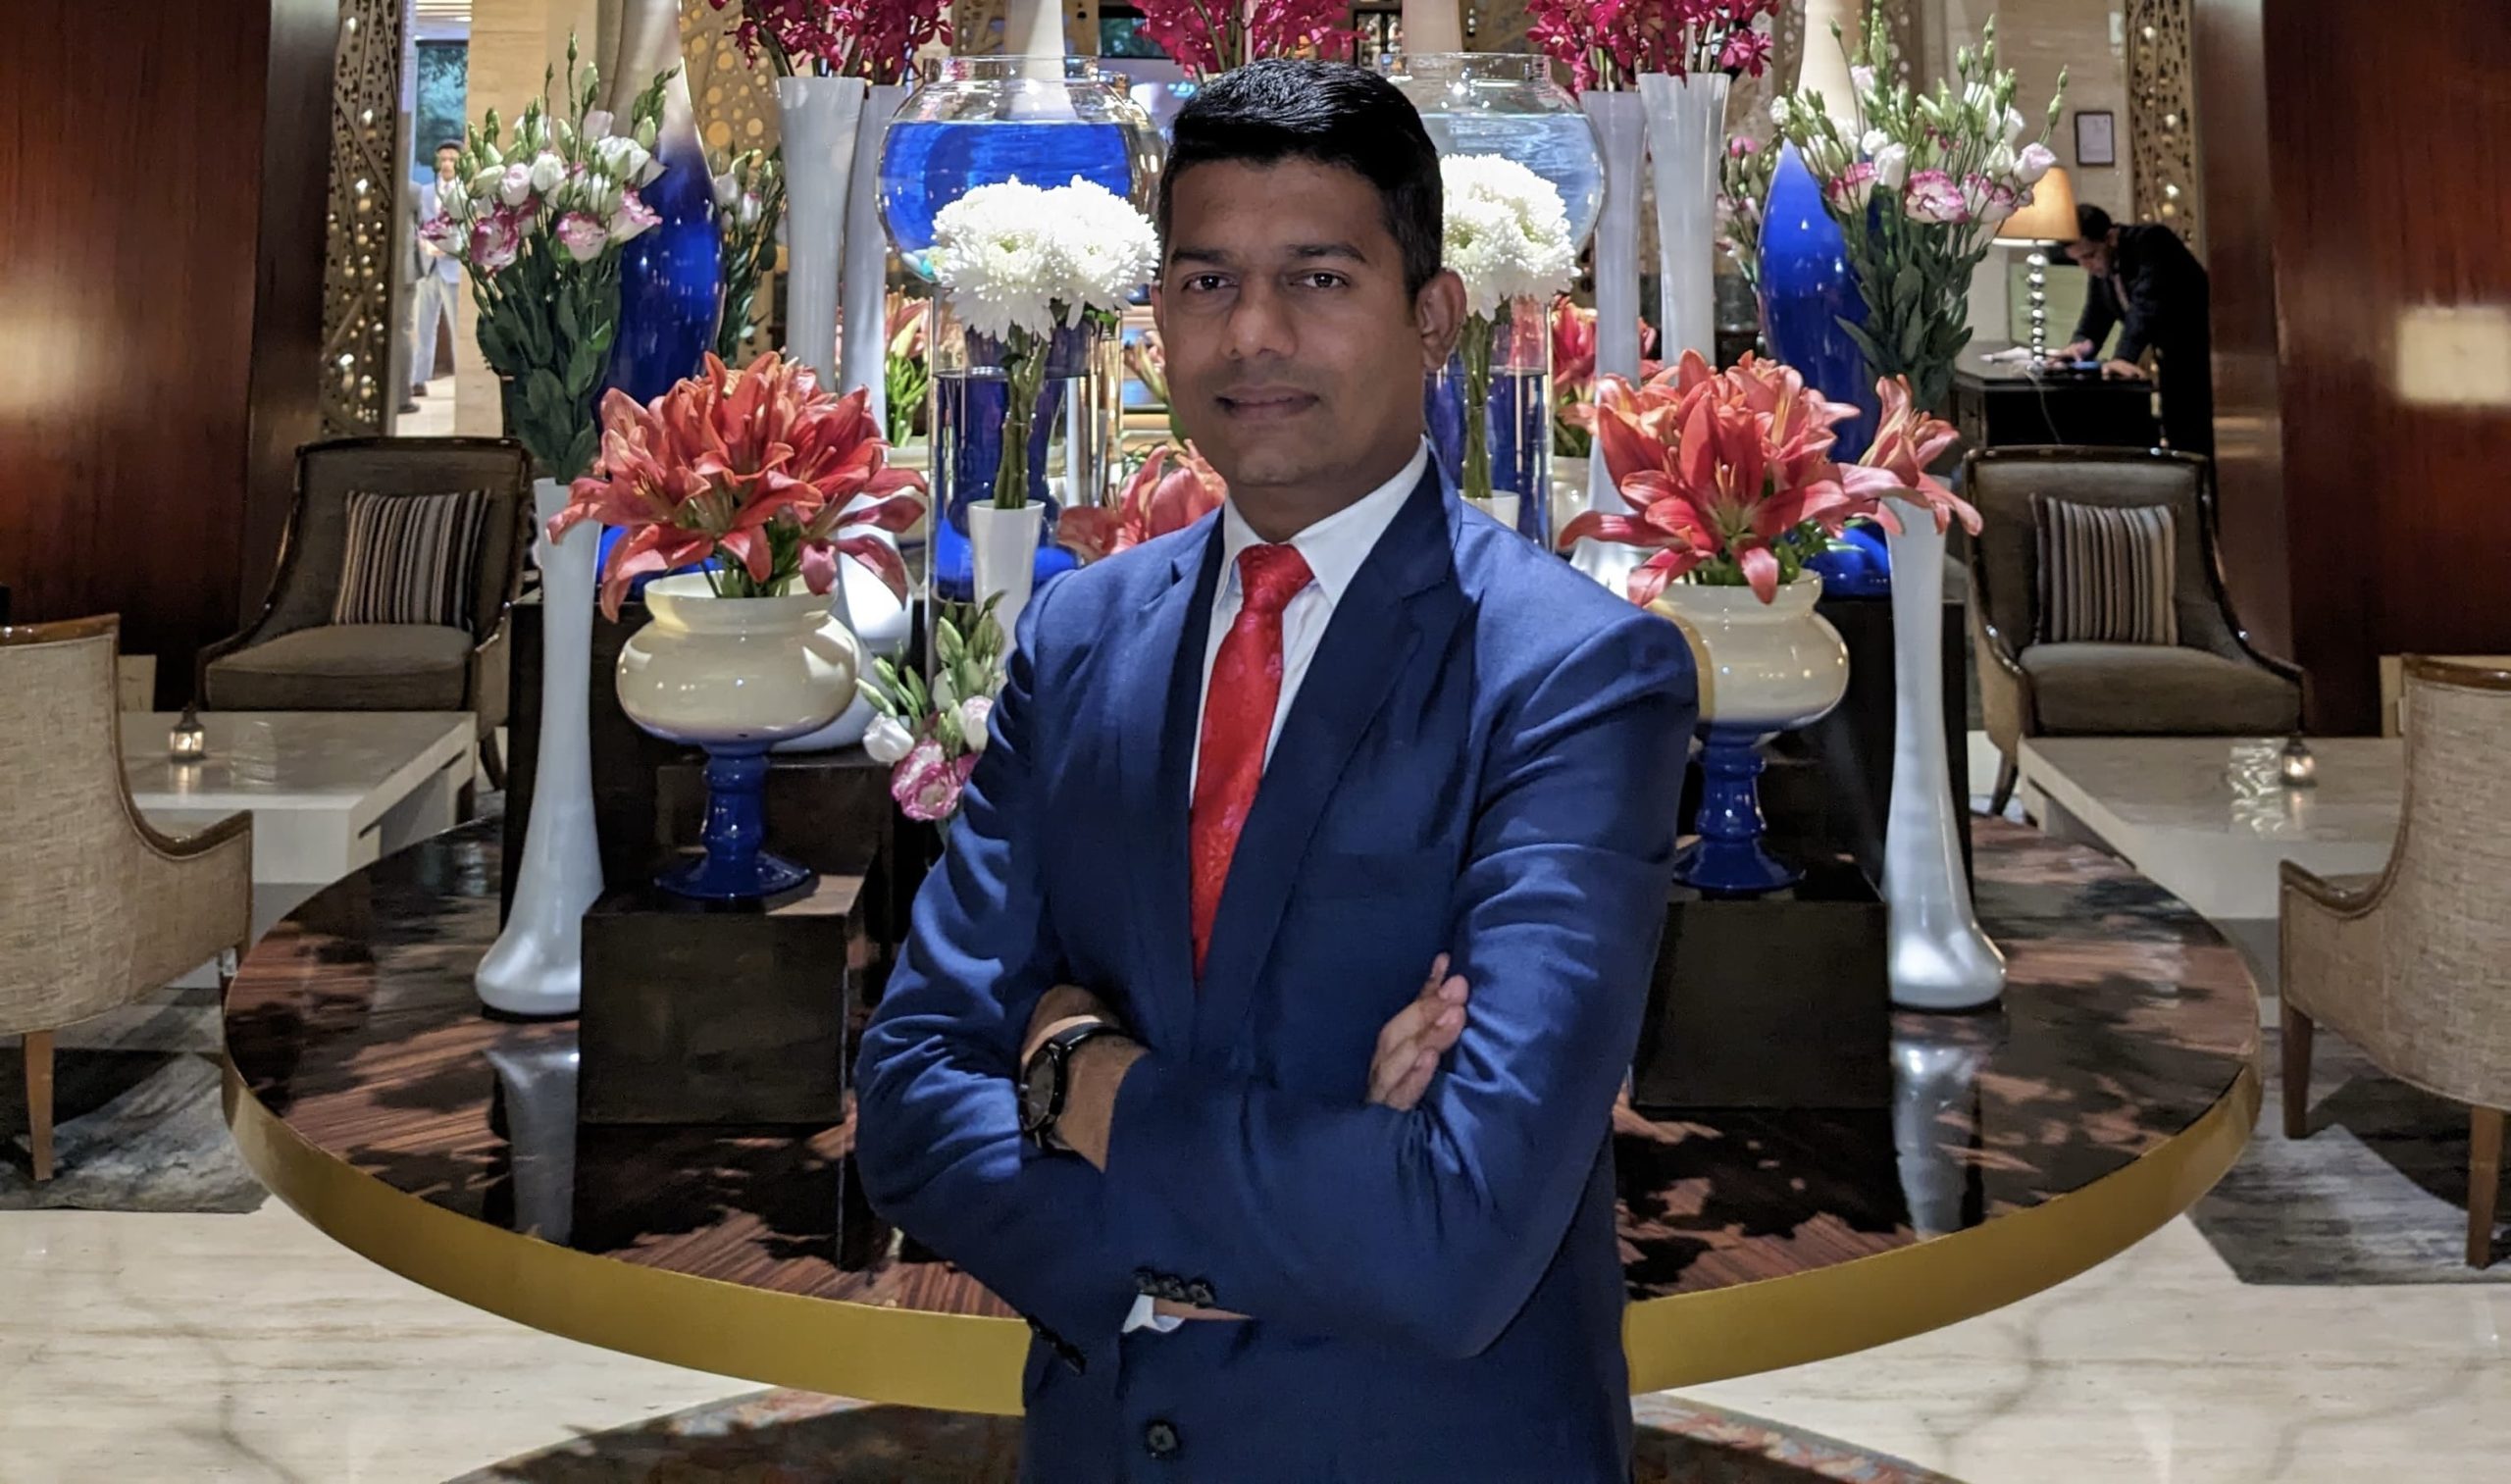 Hyatt Regency Pune Viman Nagar Announces Promotion of Fahim Sande to Associate Director of Sales